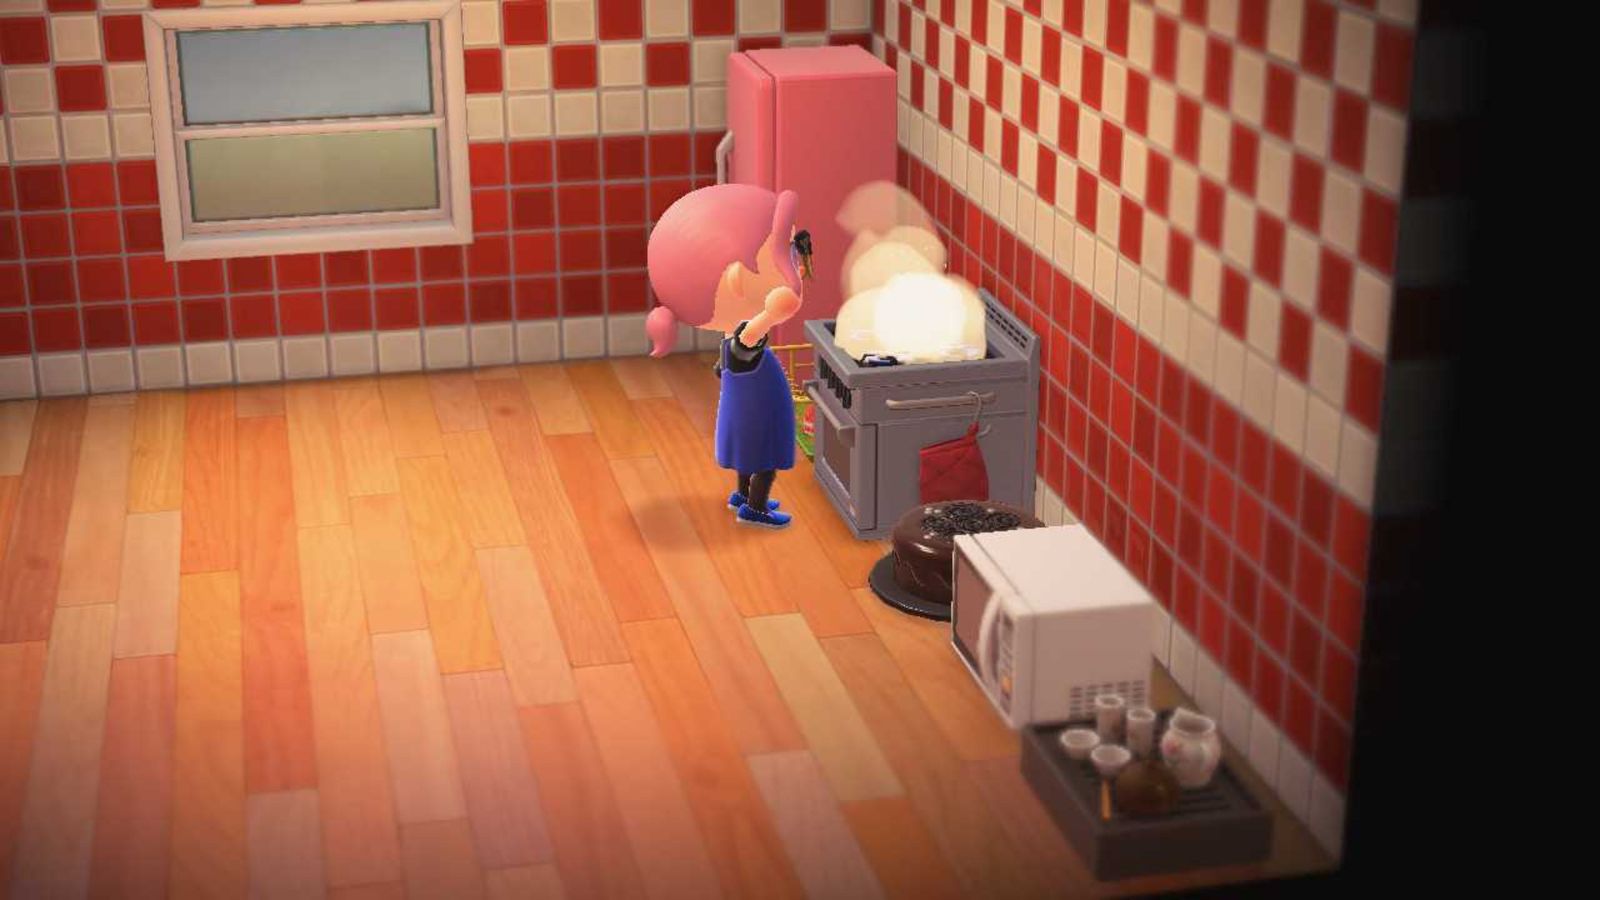 Animal Crossing New Horizons Cooking at stove